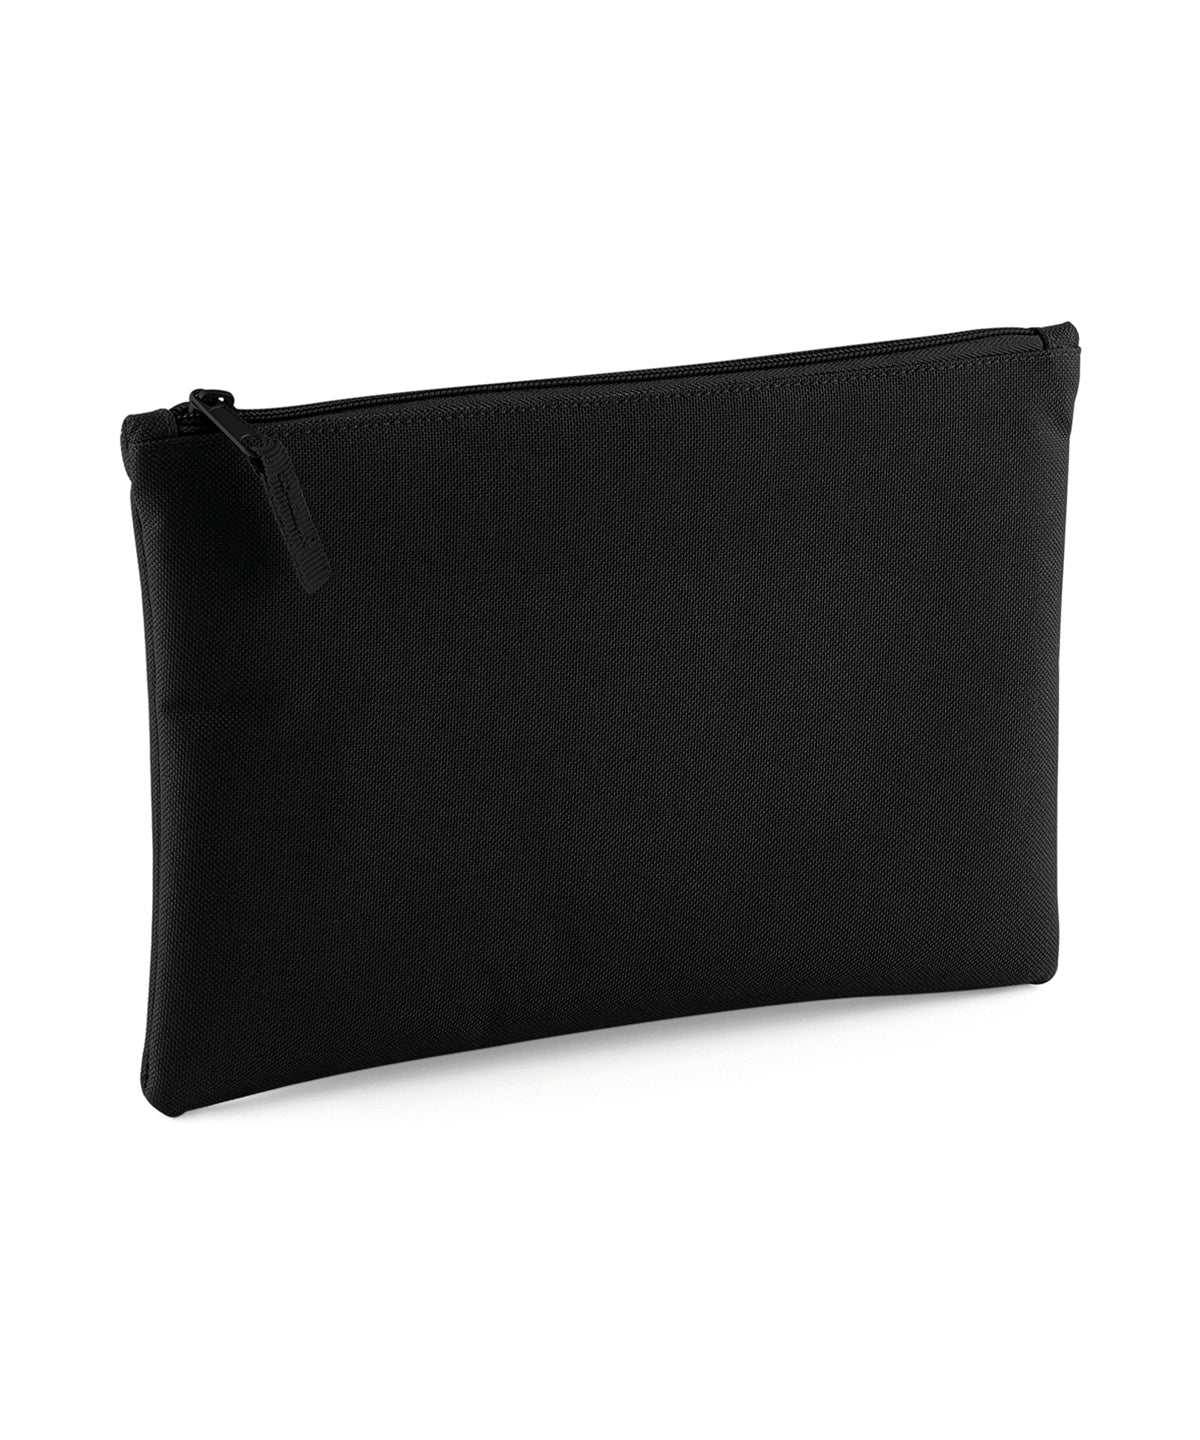 Personalised Bags - Black Bagbase Grab pouch